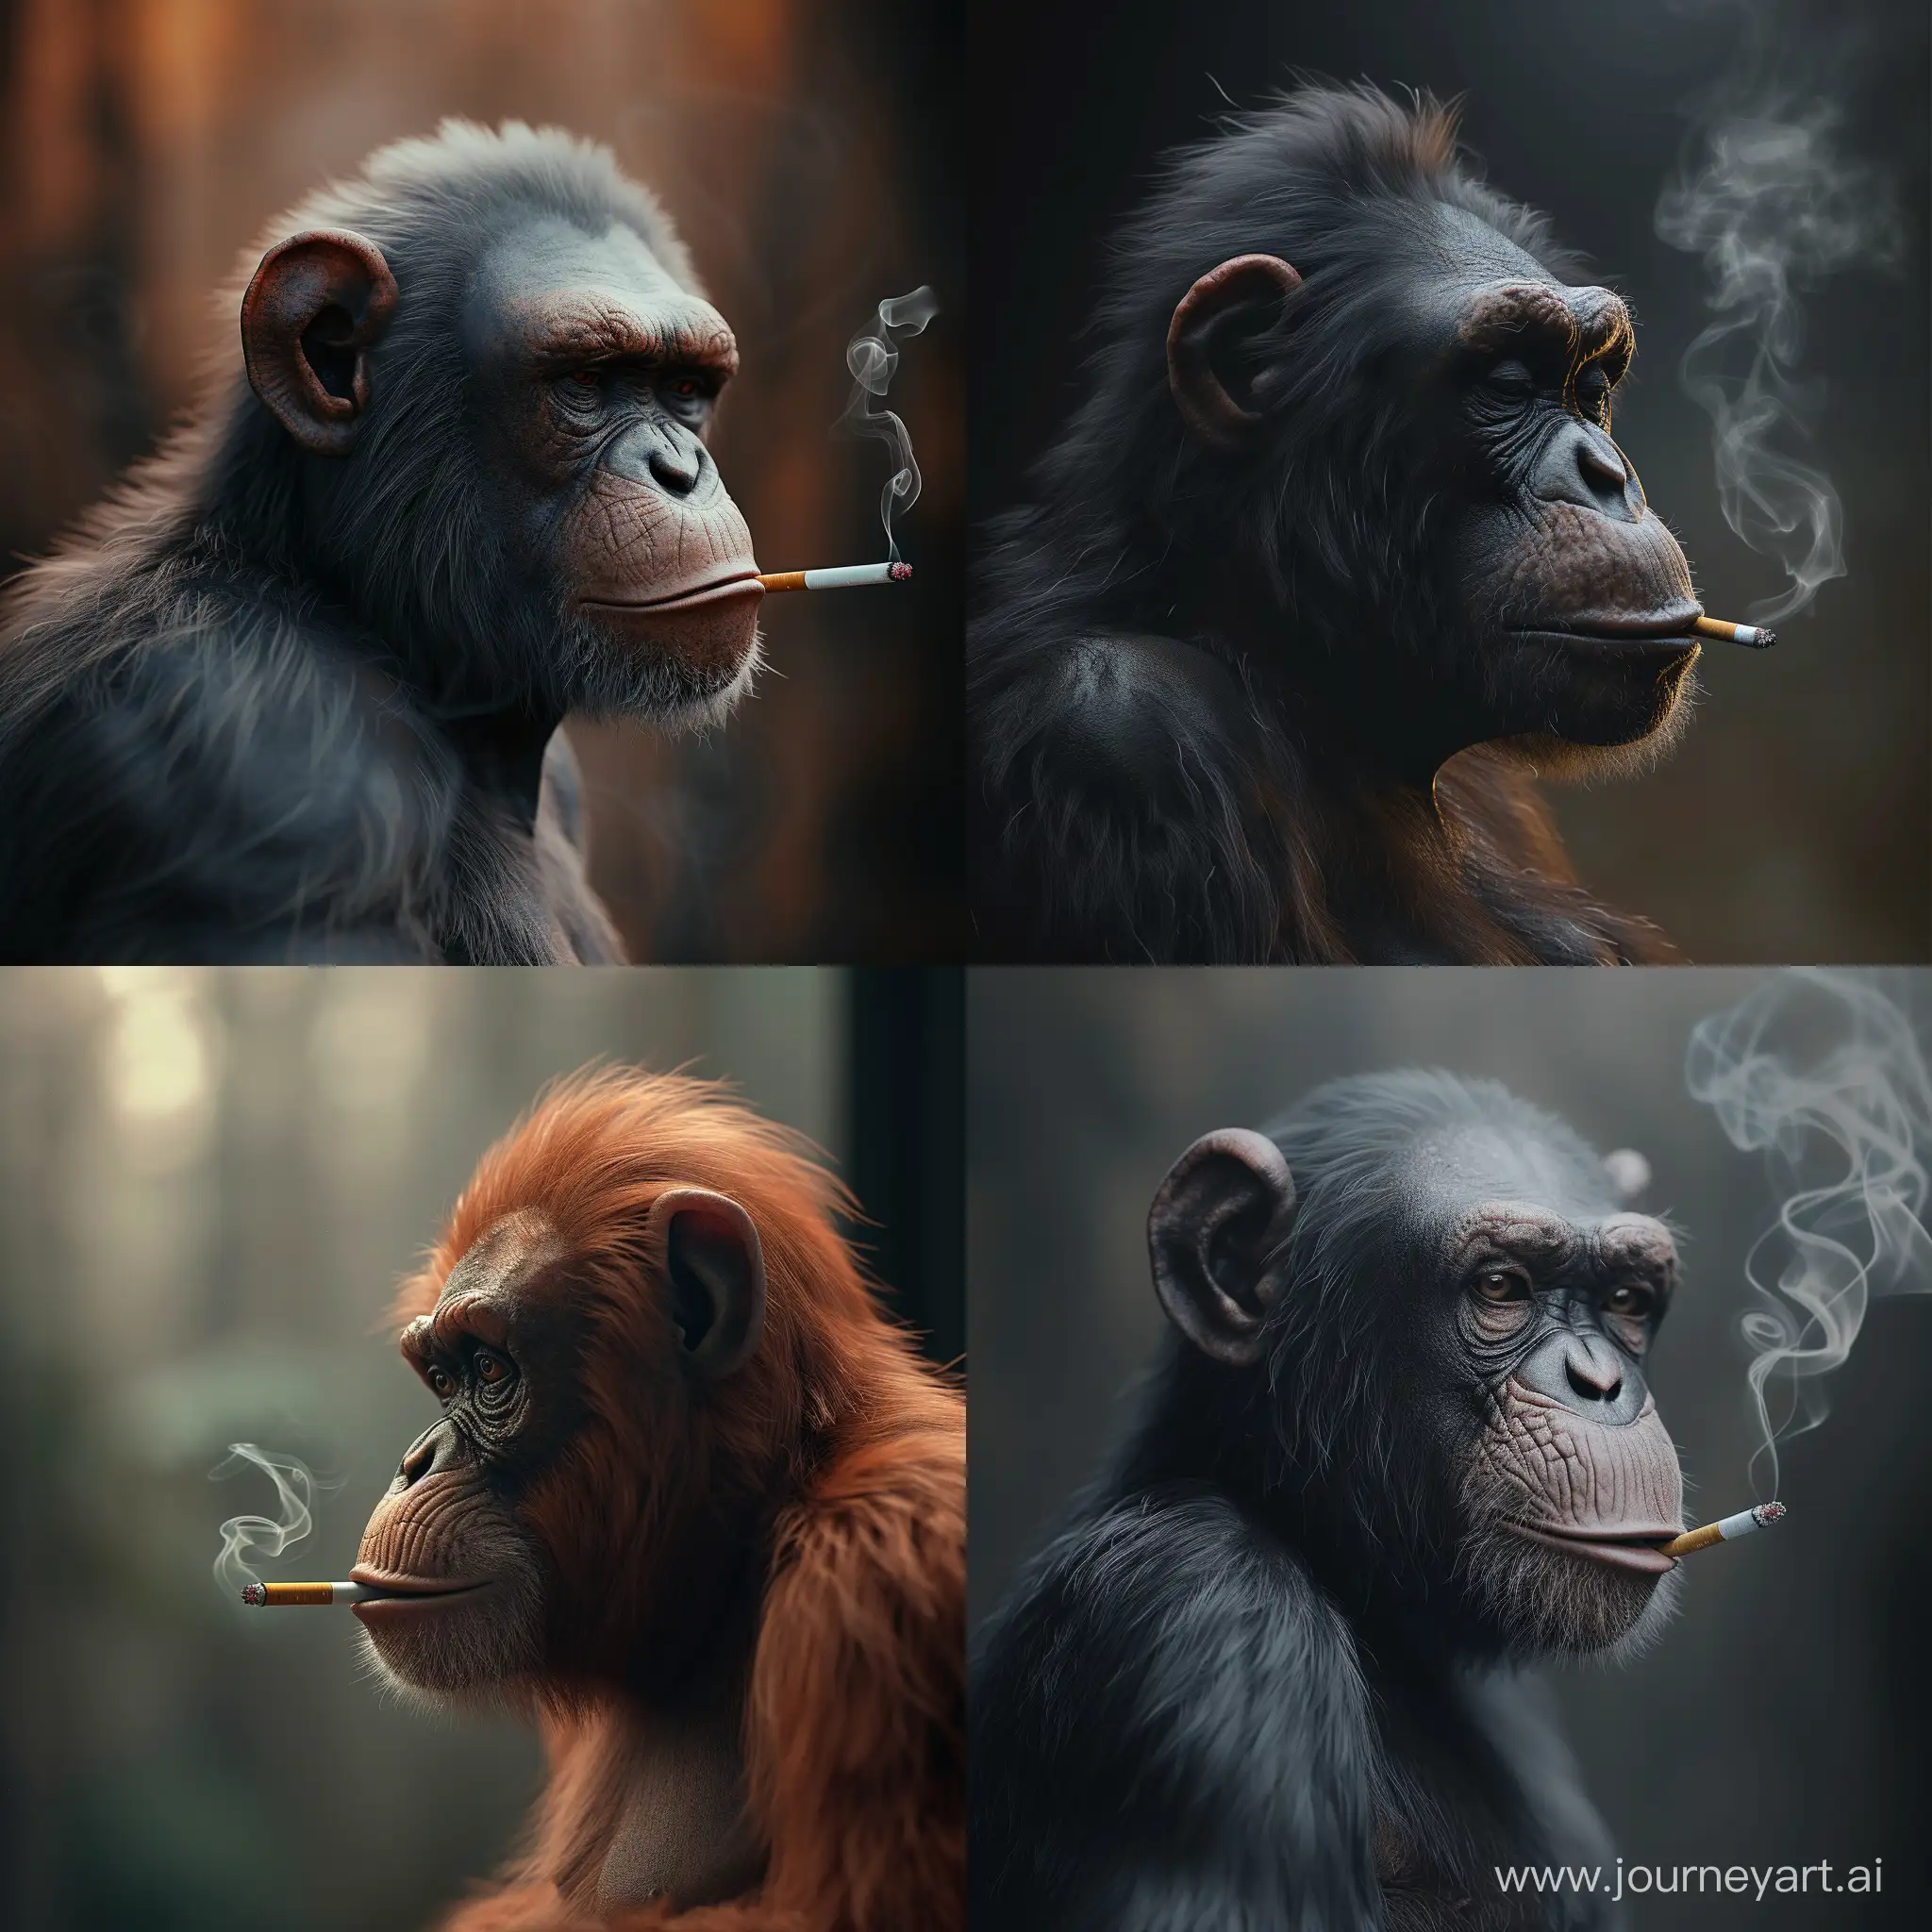 Realistic-Side-View-Monkey-Smoking-Cigarette